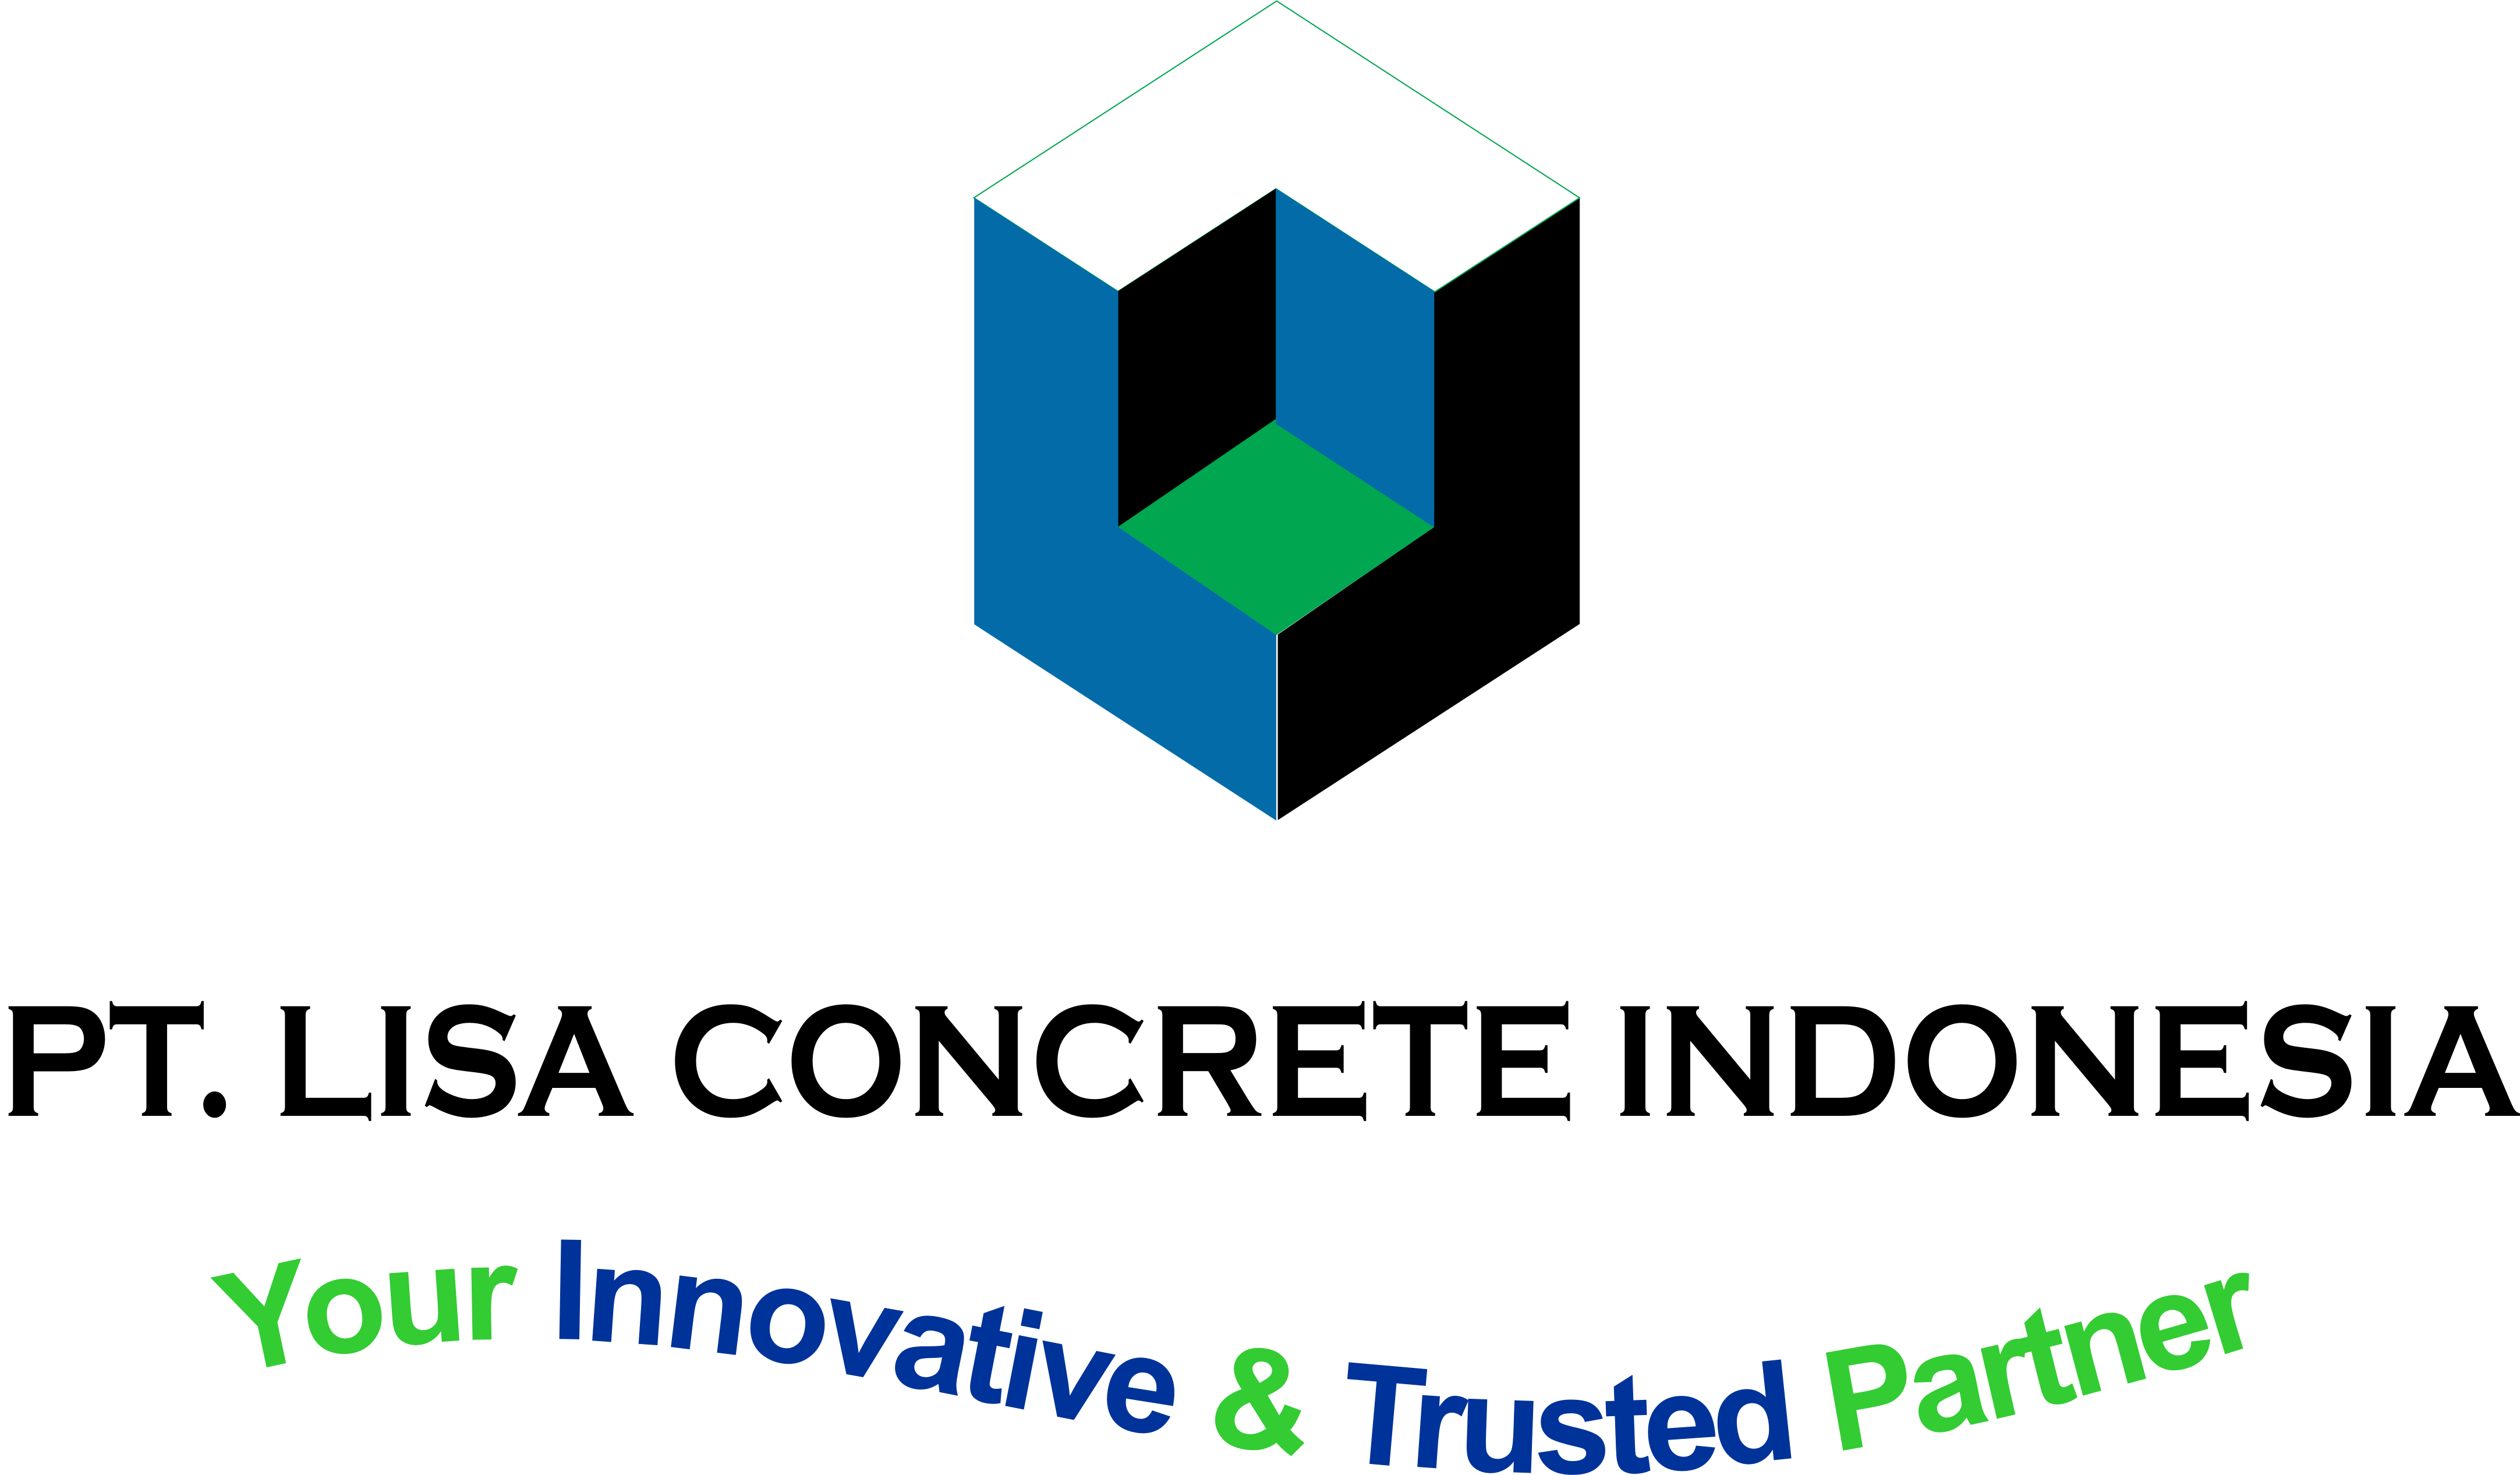 Lowongan Kerja Project Controller di Lisa Concrete Indonesia, Plesungan, Gondangrejo, Kab. Karanganyar, Jawa Tengah, Indonesia